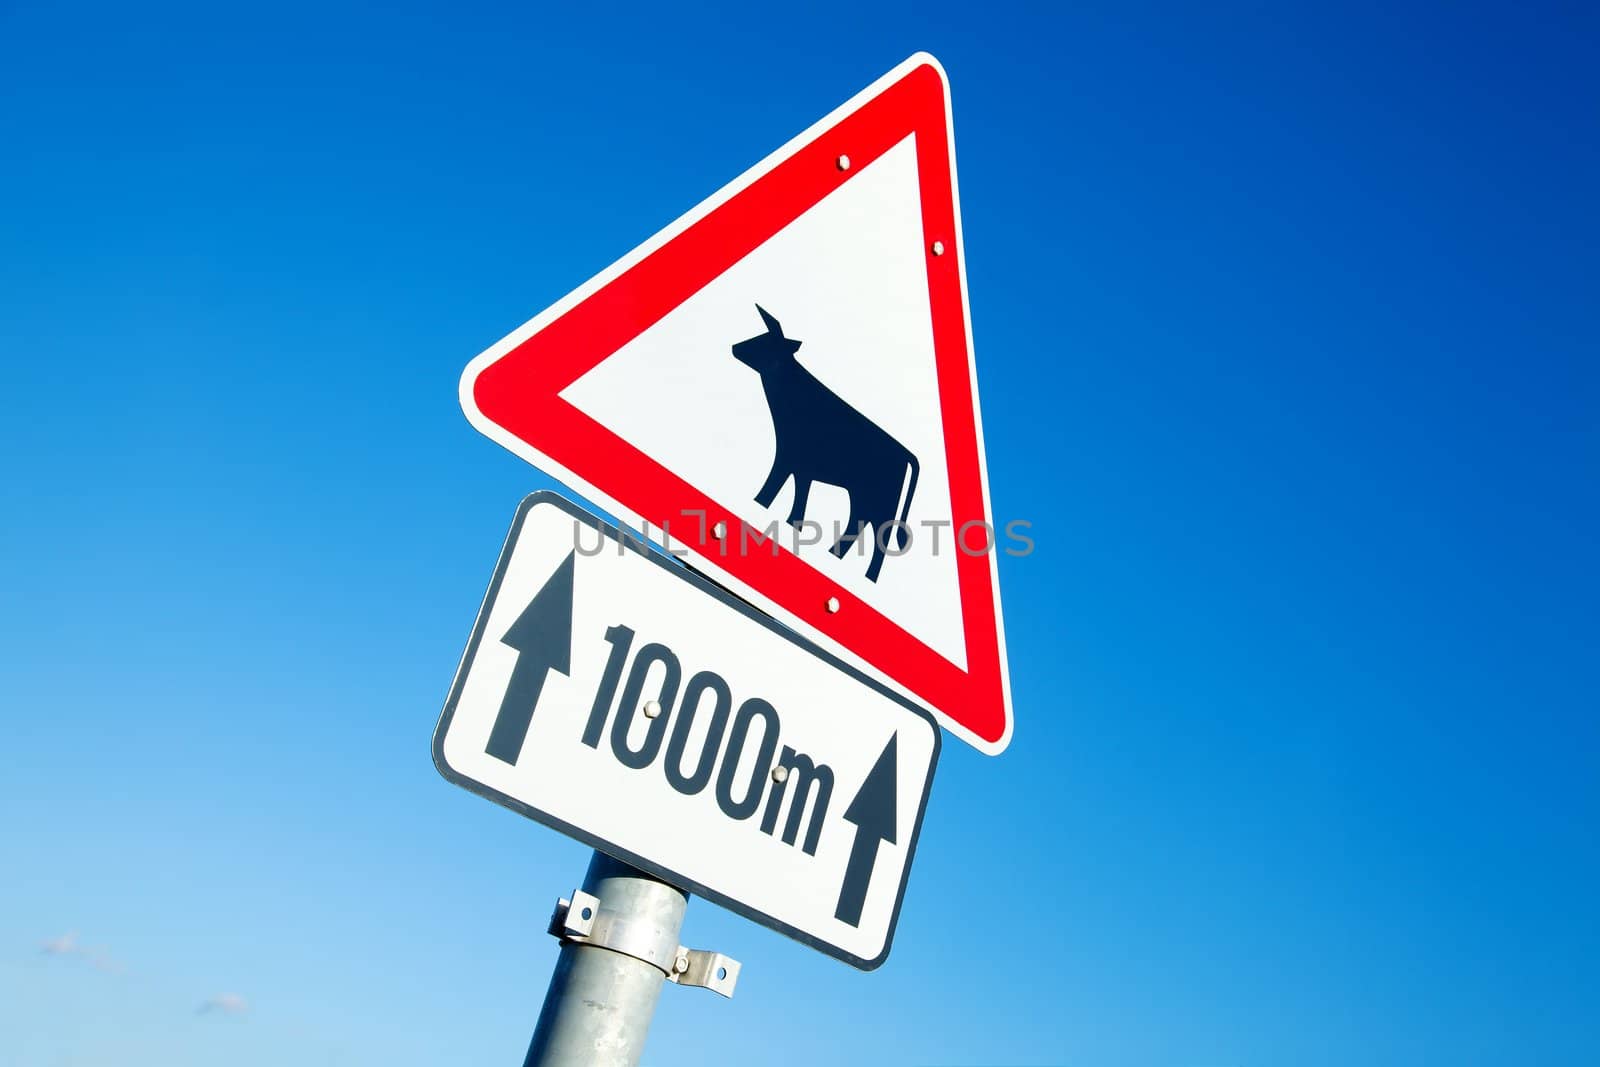 Cow sign by Gudella